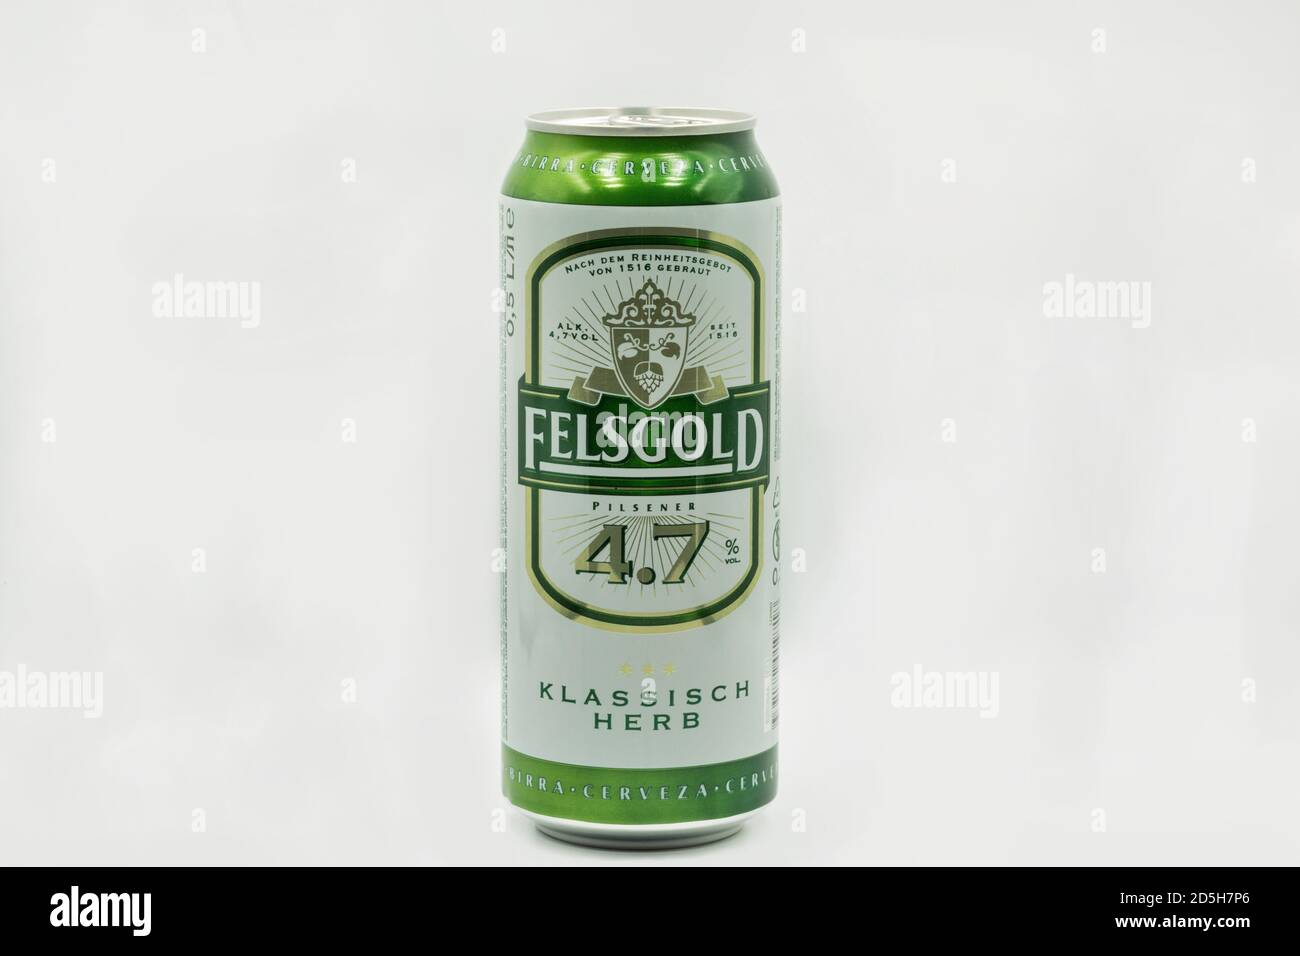 KYIV, UKRAINE - JULY 23, 2020: Felsgold Klassisch Herb German pilsner beer can closeup against white bacground. Stock Photo